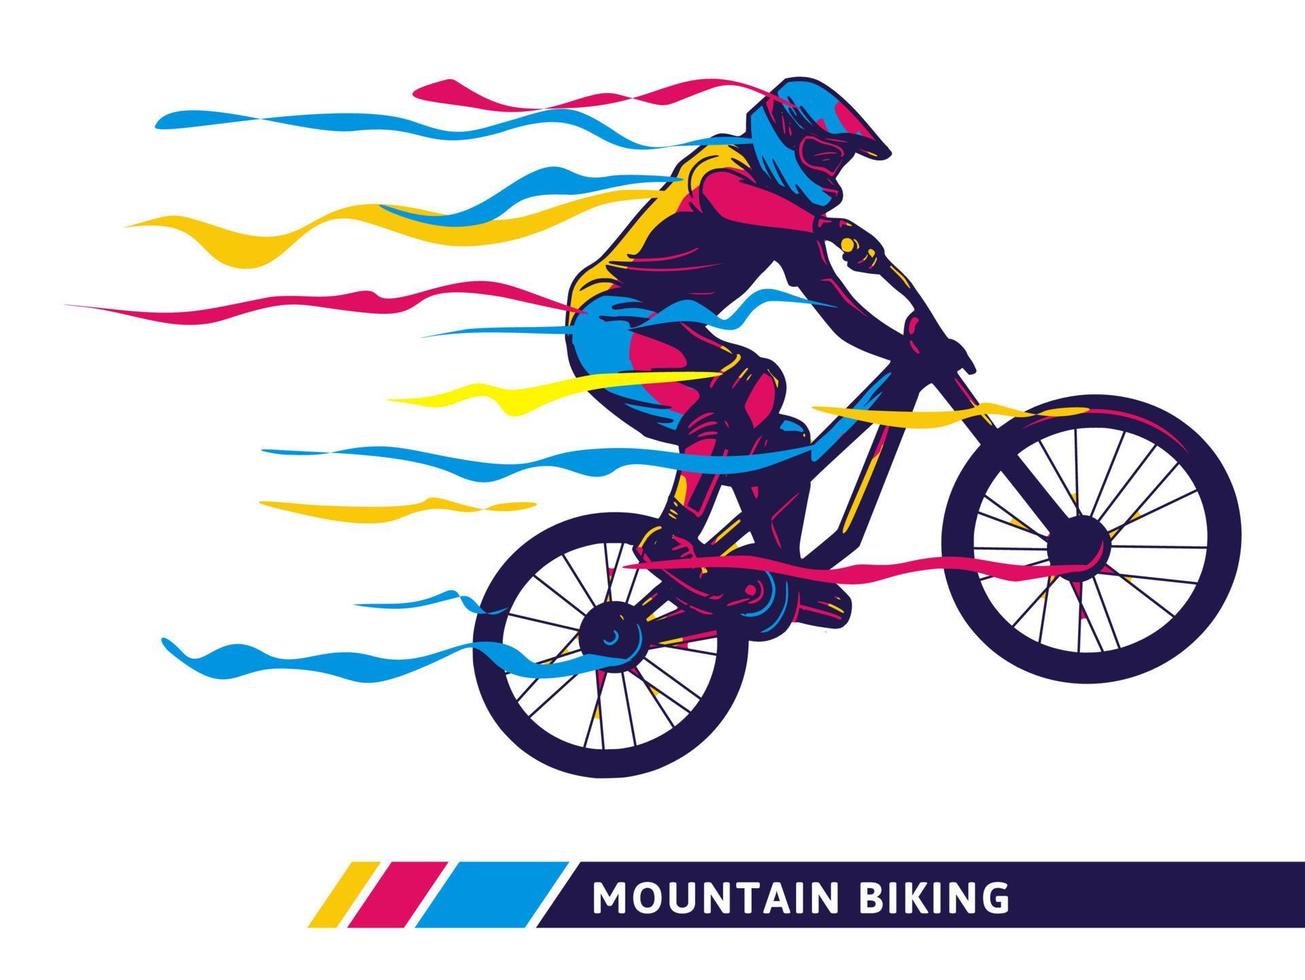 Downhill-Mountainbike-Bewegung bunte Kunstwerke Radfahrerbewegung moderne Illustration vektor